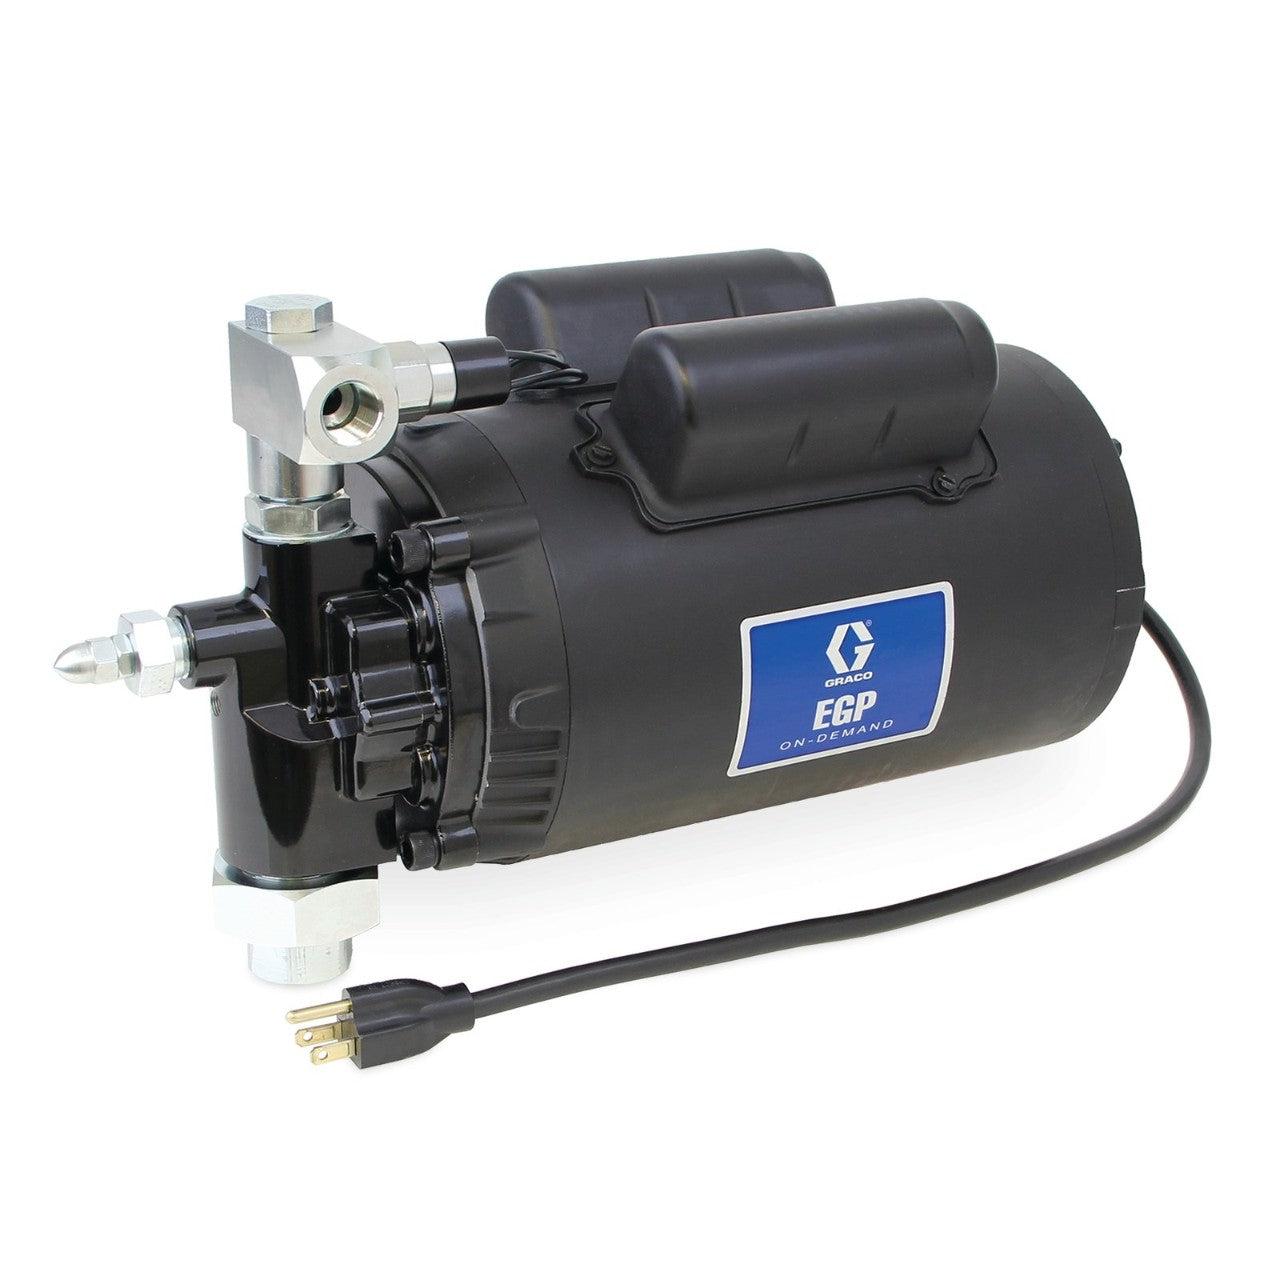 EGP™ On-Demand Pump, 115 VAC, 3.7 gpm (14.0 lpm), 500 psi (34.5 bar)